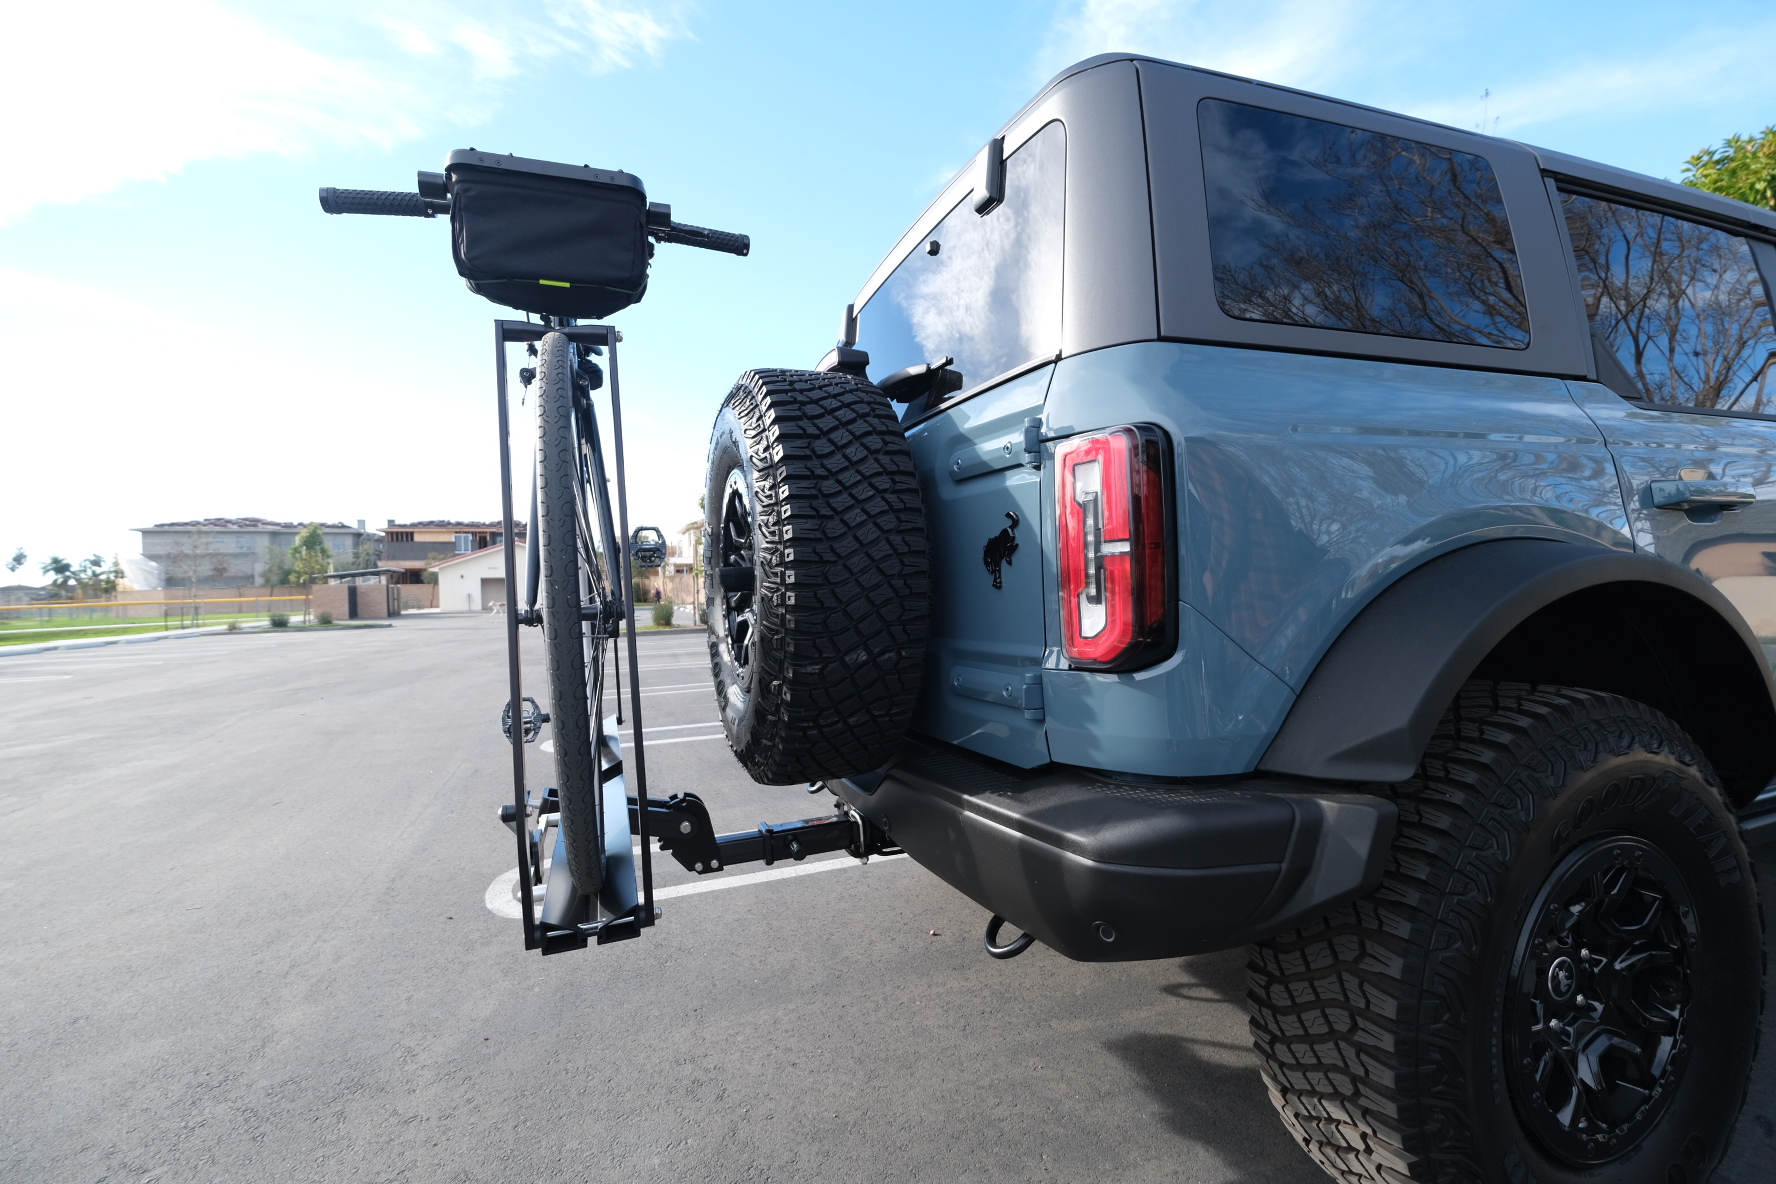 Ford Bronco Hitch Mount Bike Rack Options - Post your pics 018D92AD-B1C6-410E-A77E-2C079FB1A461